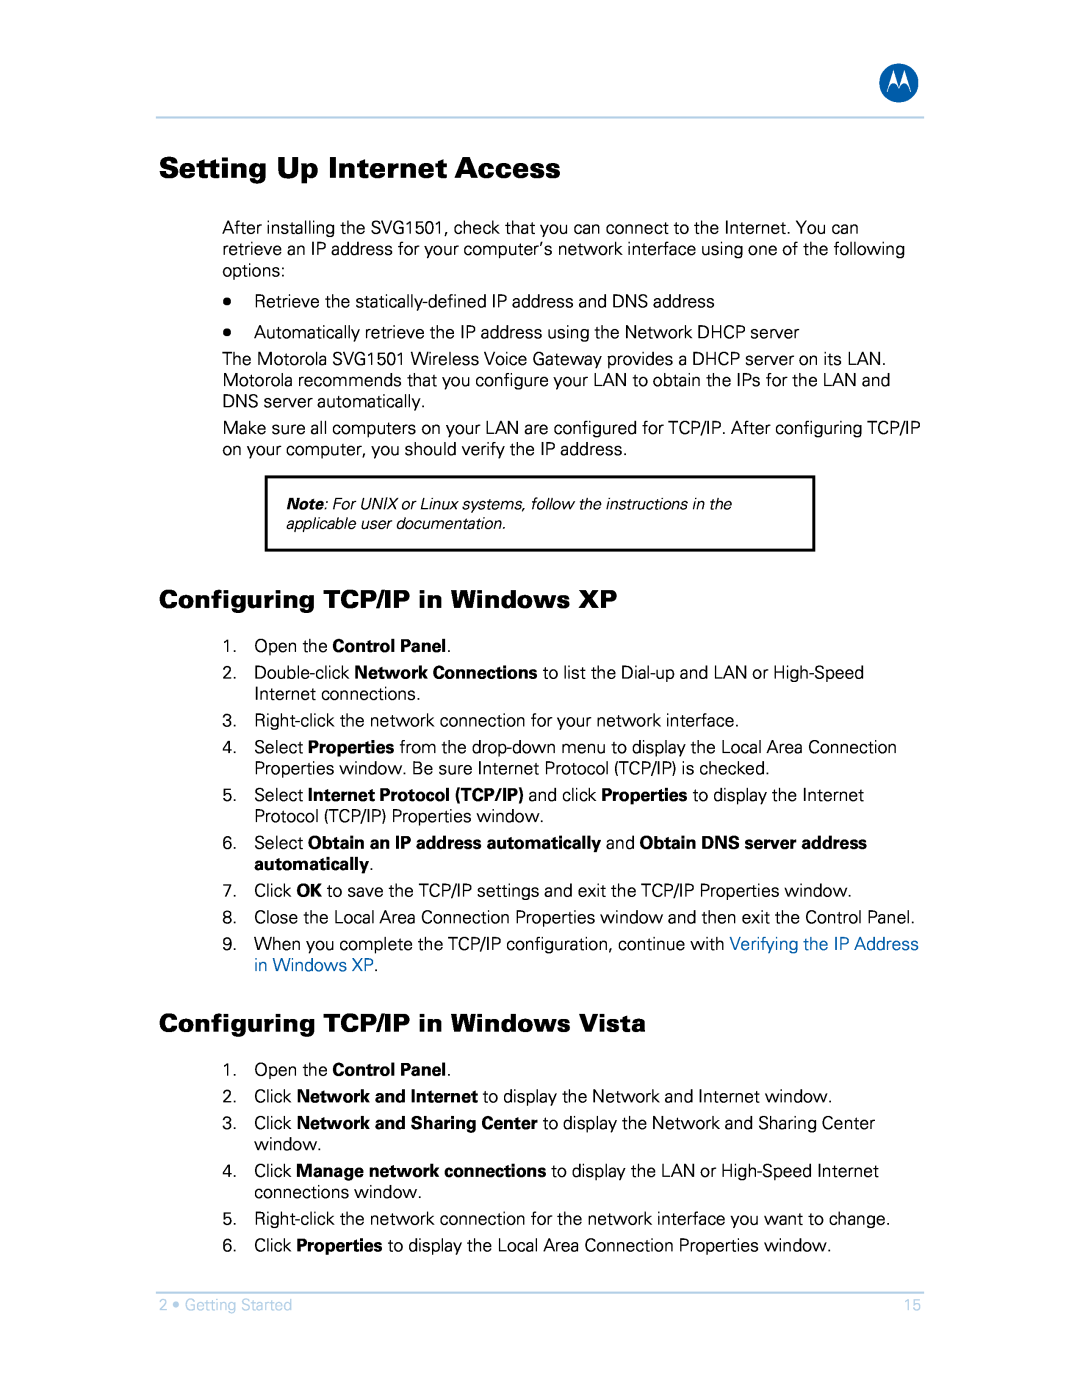 Motorola SVG1501E manual Setting Up Internet Access, Configuring TCP/IP in Windows XP, Configuring TCP/IP in Windows Vista 